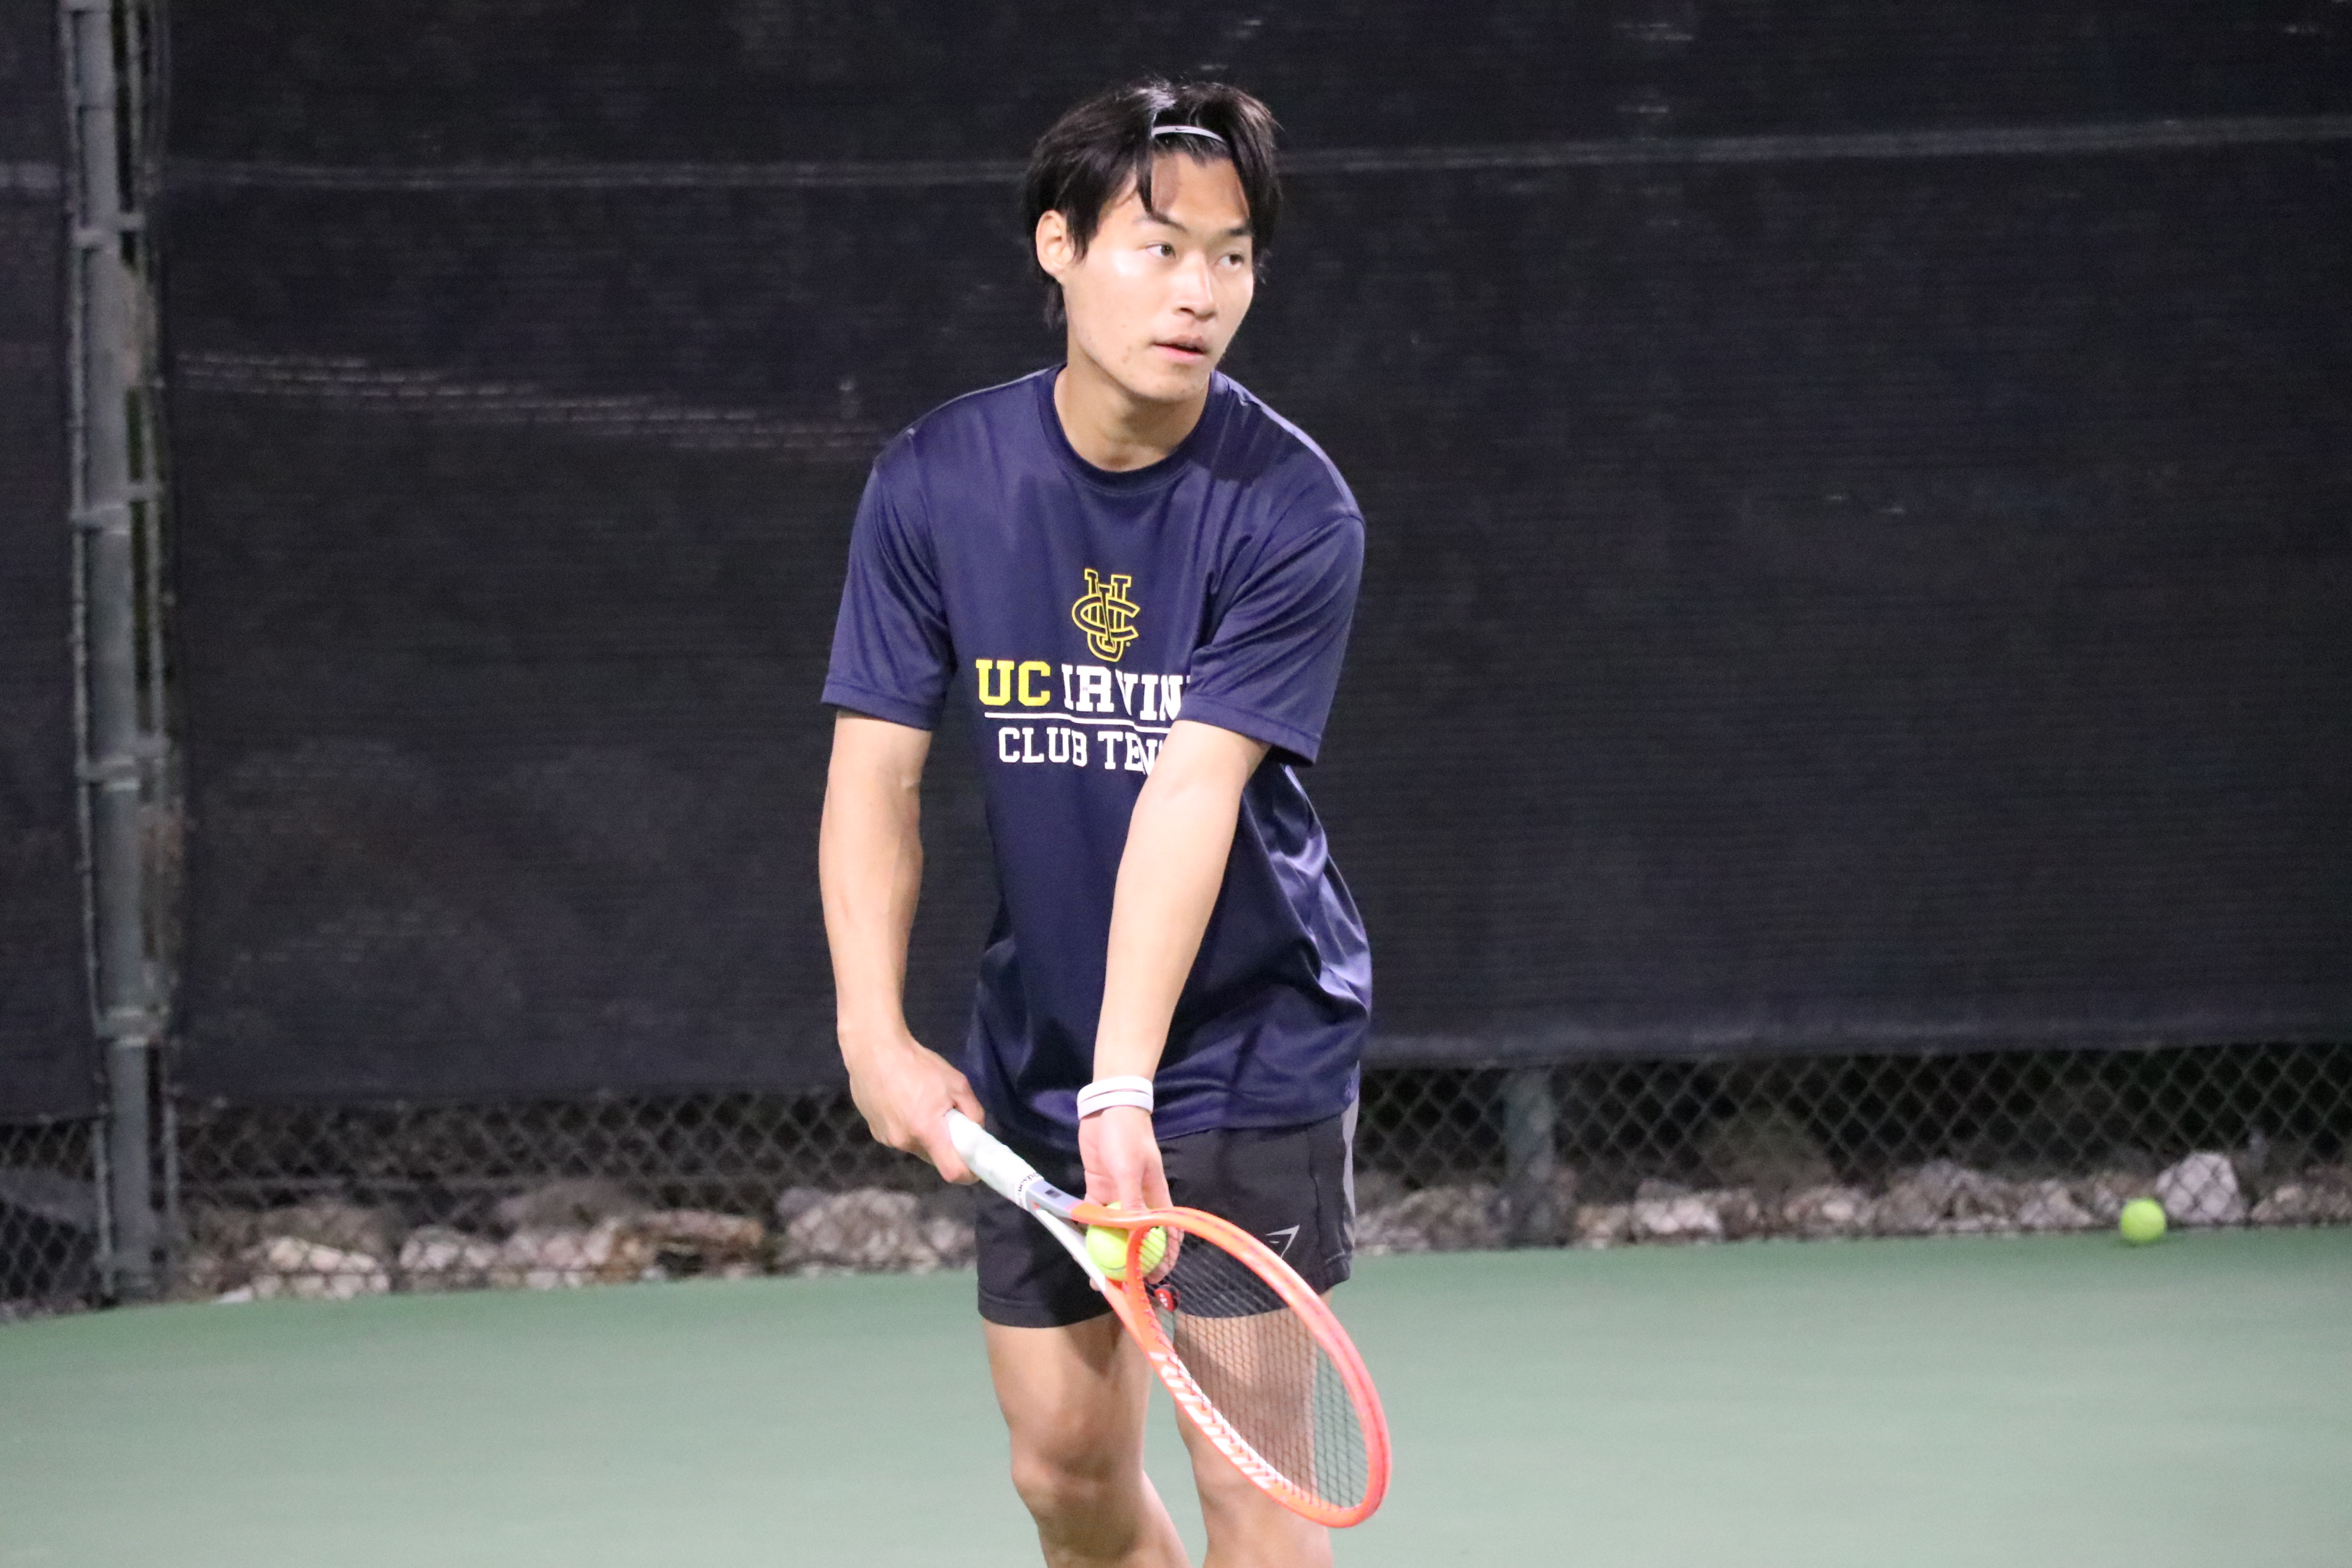 Desmond C. teaches tennis lessons in South Pasadena, CA